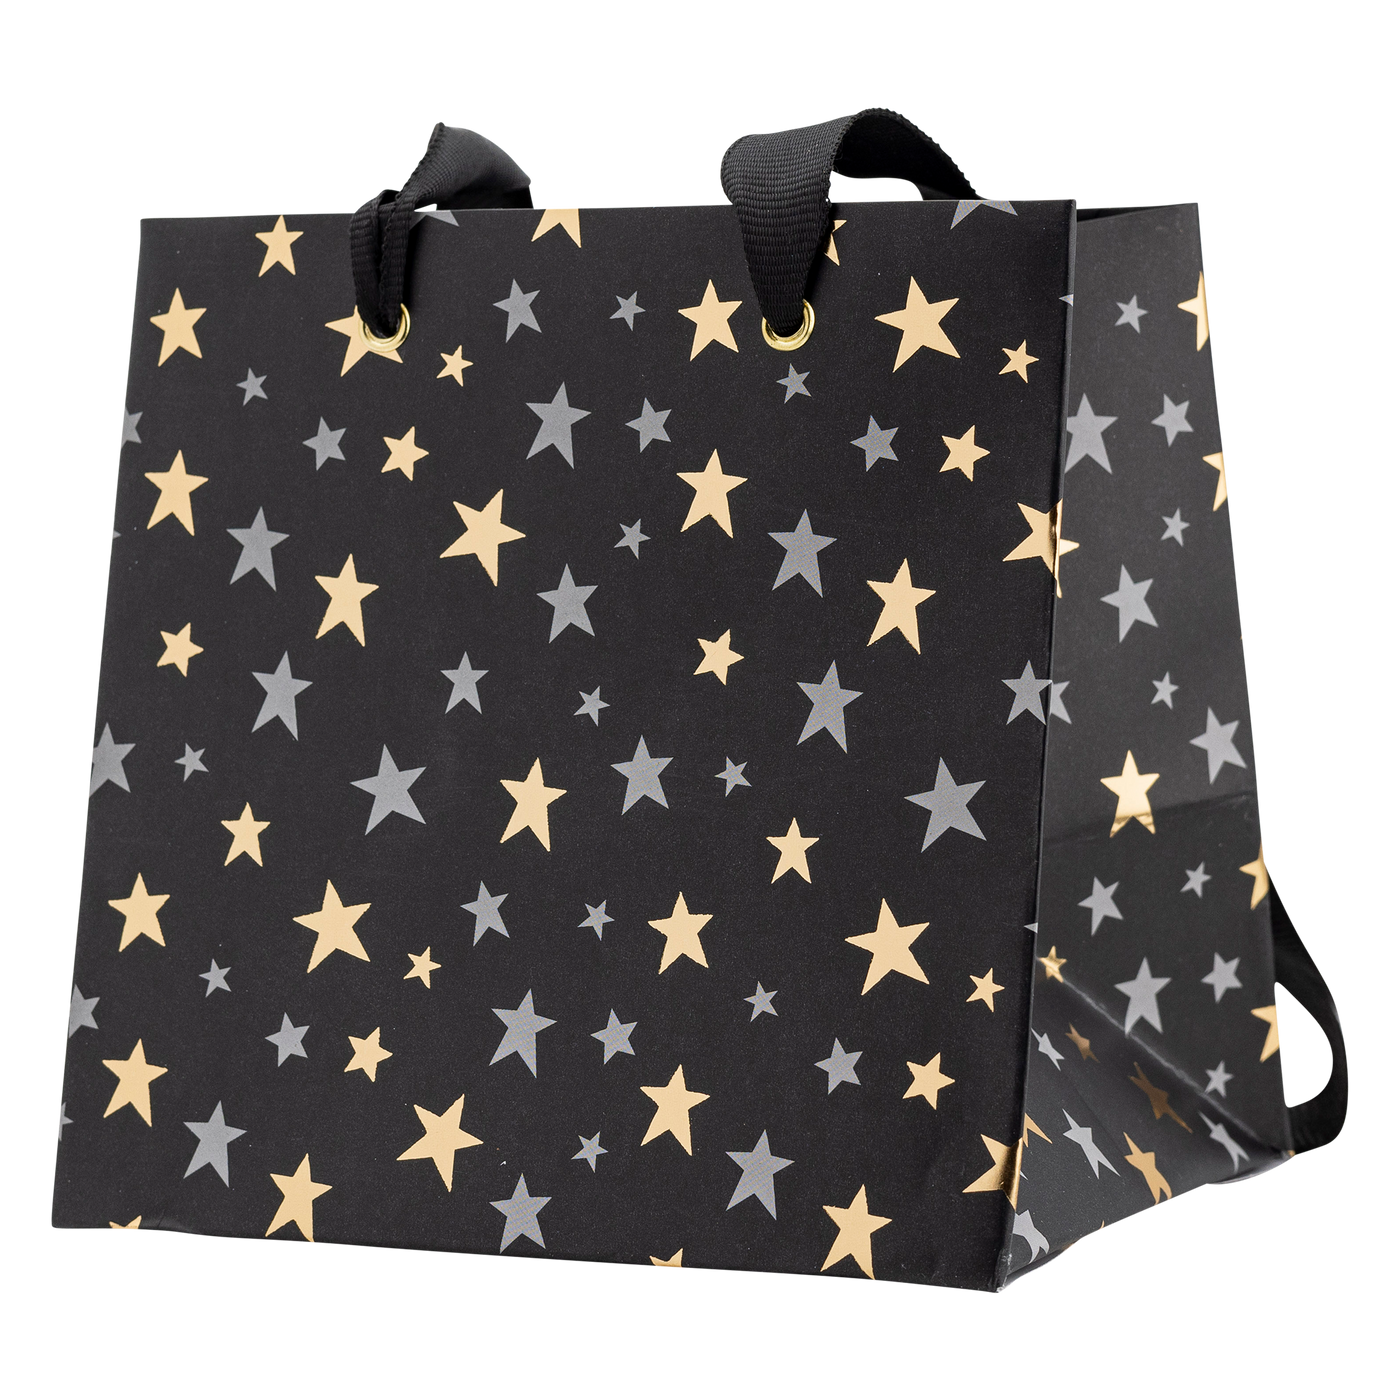 PLGBS102 - Grad Stars Gift Bag Set of 6